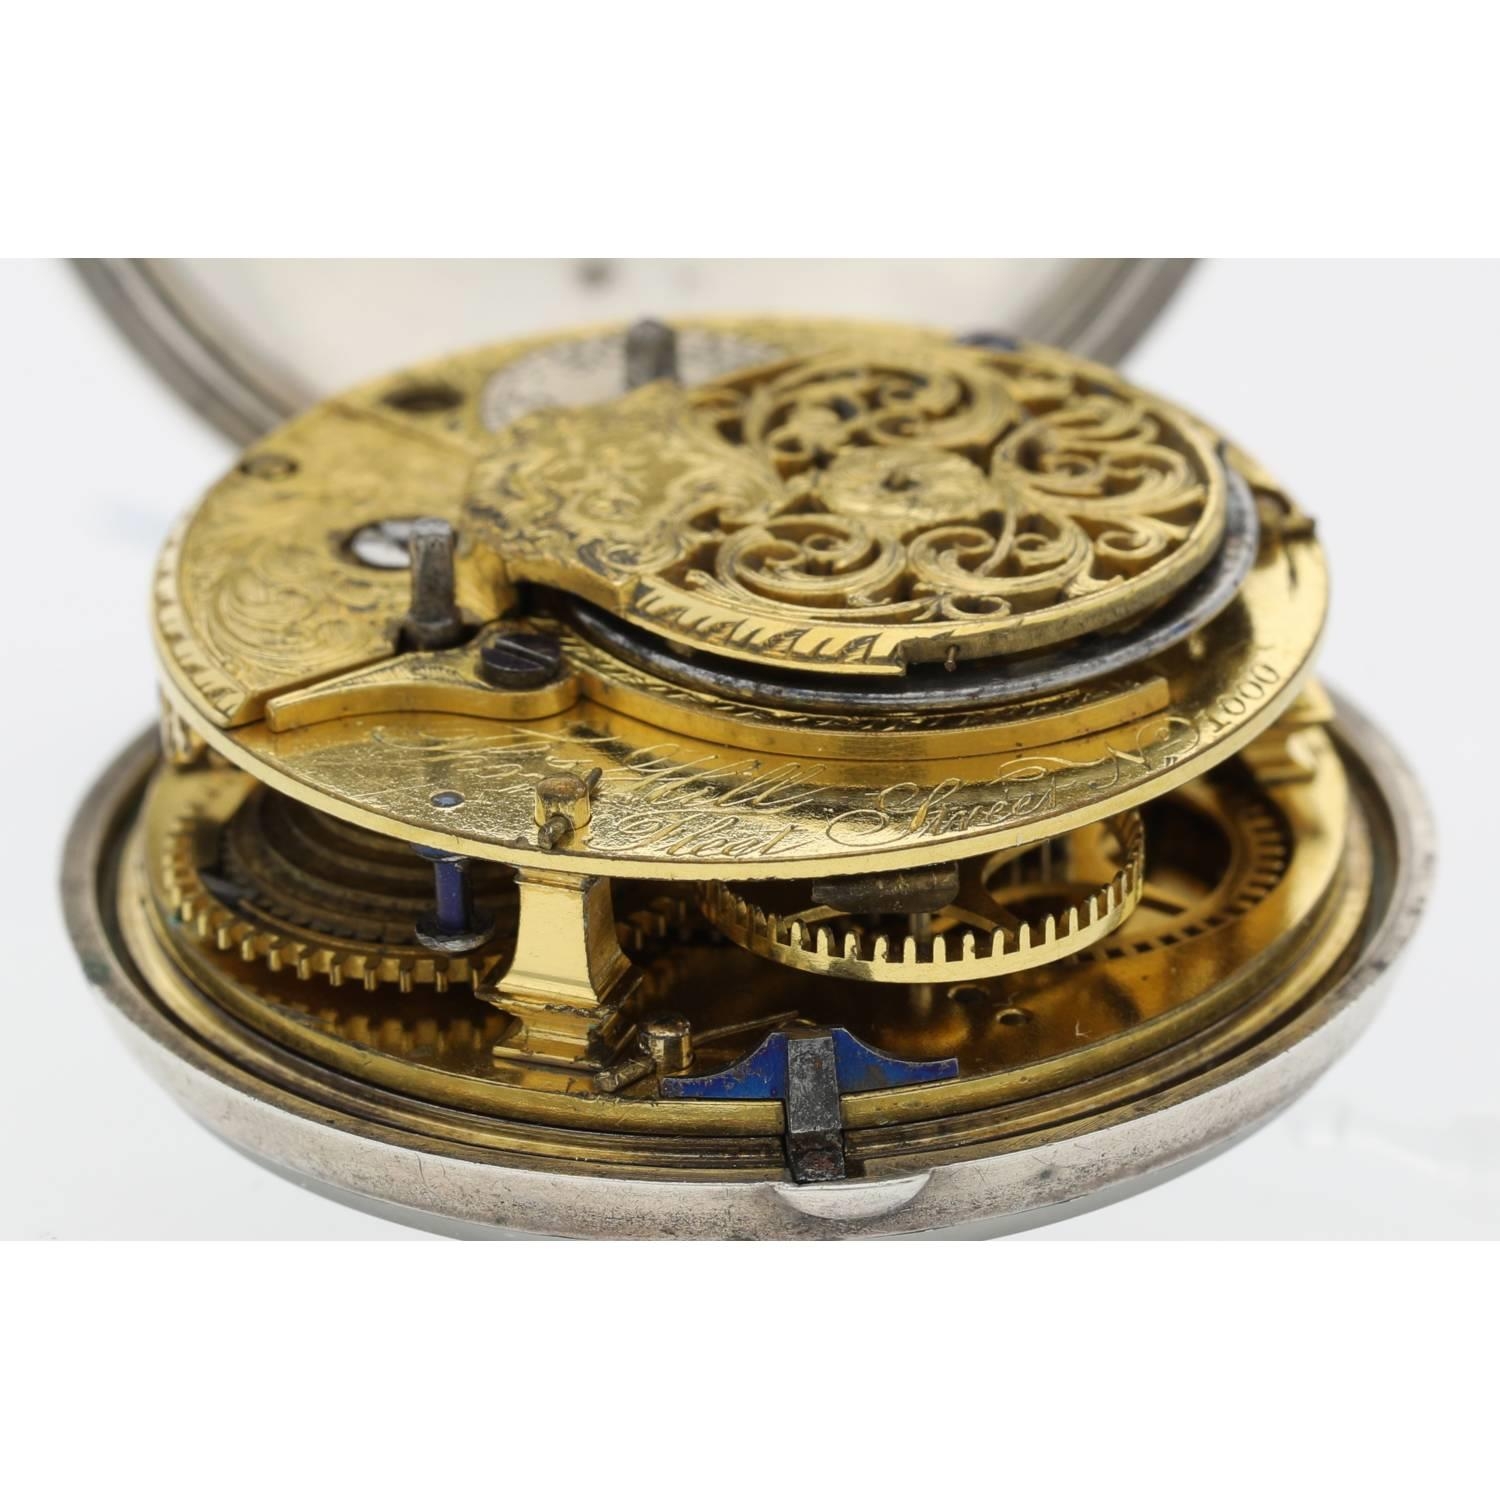 Thomas Hill, Fleet Street - George III silver pair cased verge pocket watch, London 1776, signed - Image 6 of 10